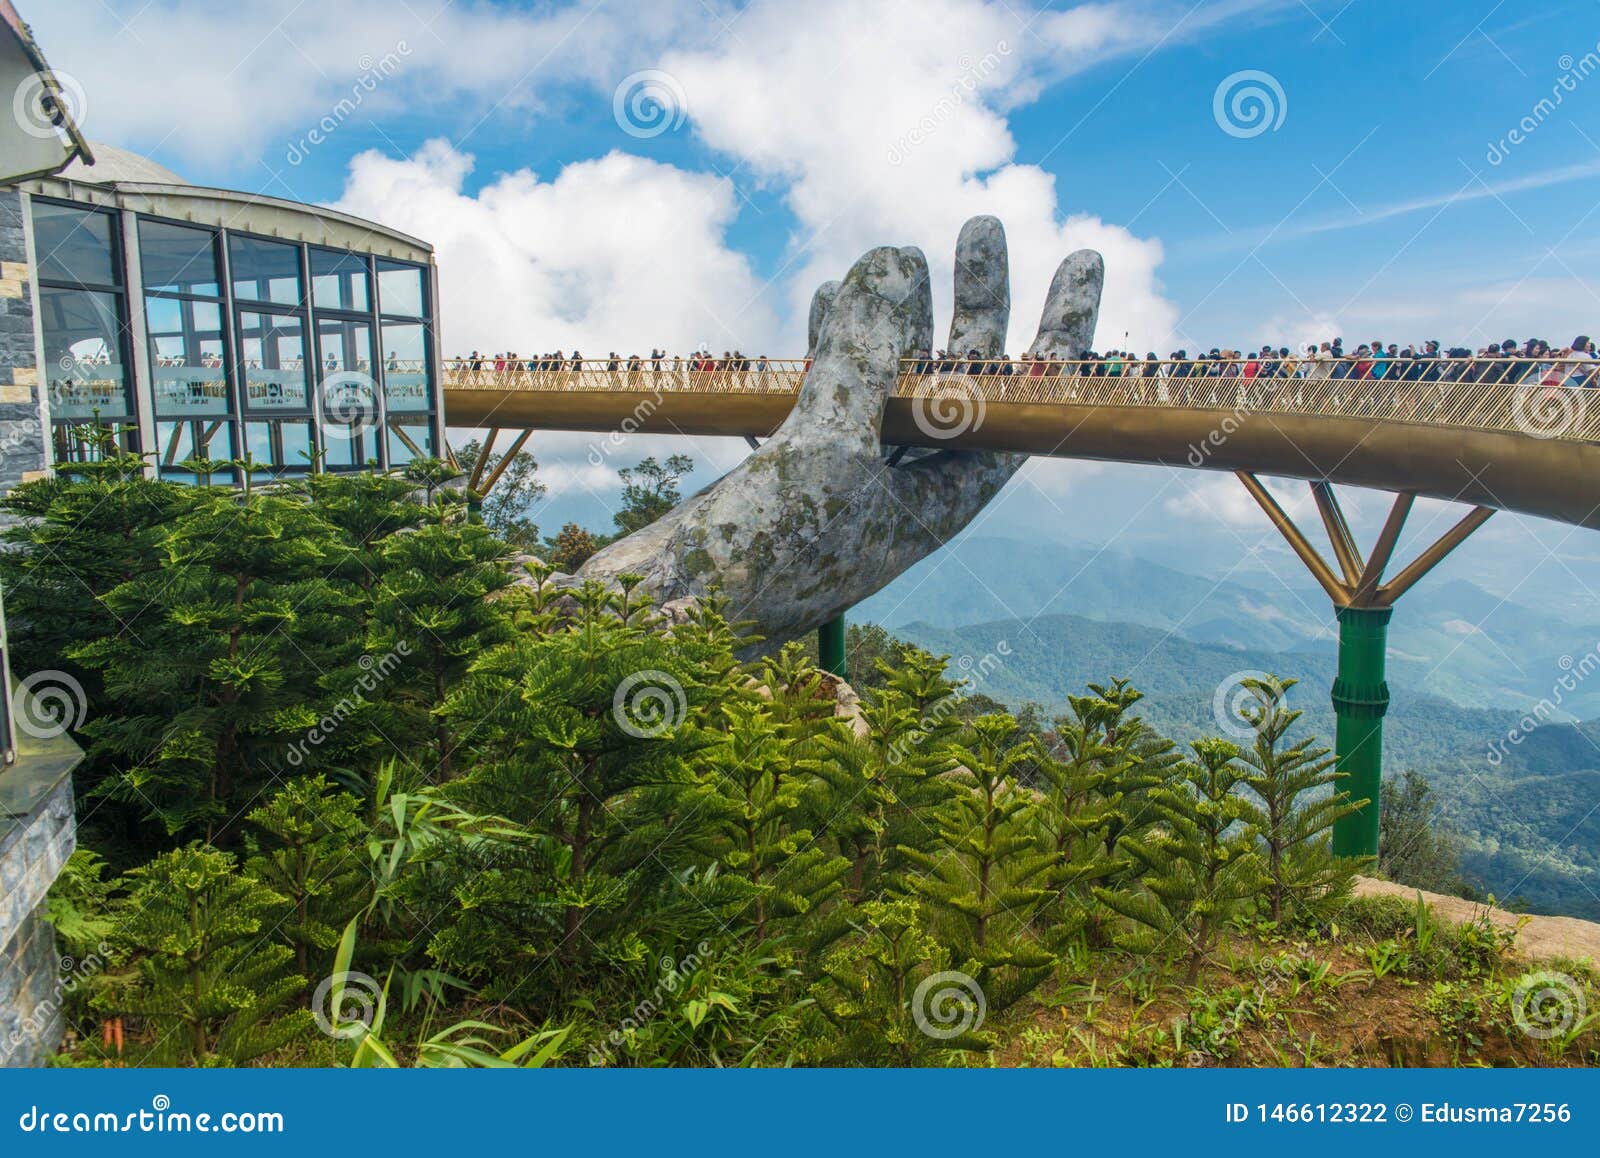 A View of Golden Bridge in Sunworld Ba Na Hills Park in Da Nang, Vietnam. Editorial Photography - Image of travel, nang: 146612322